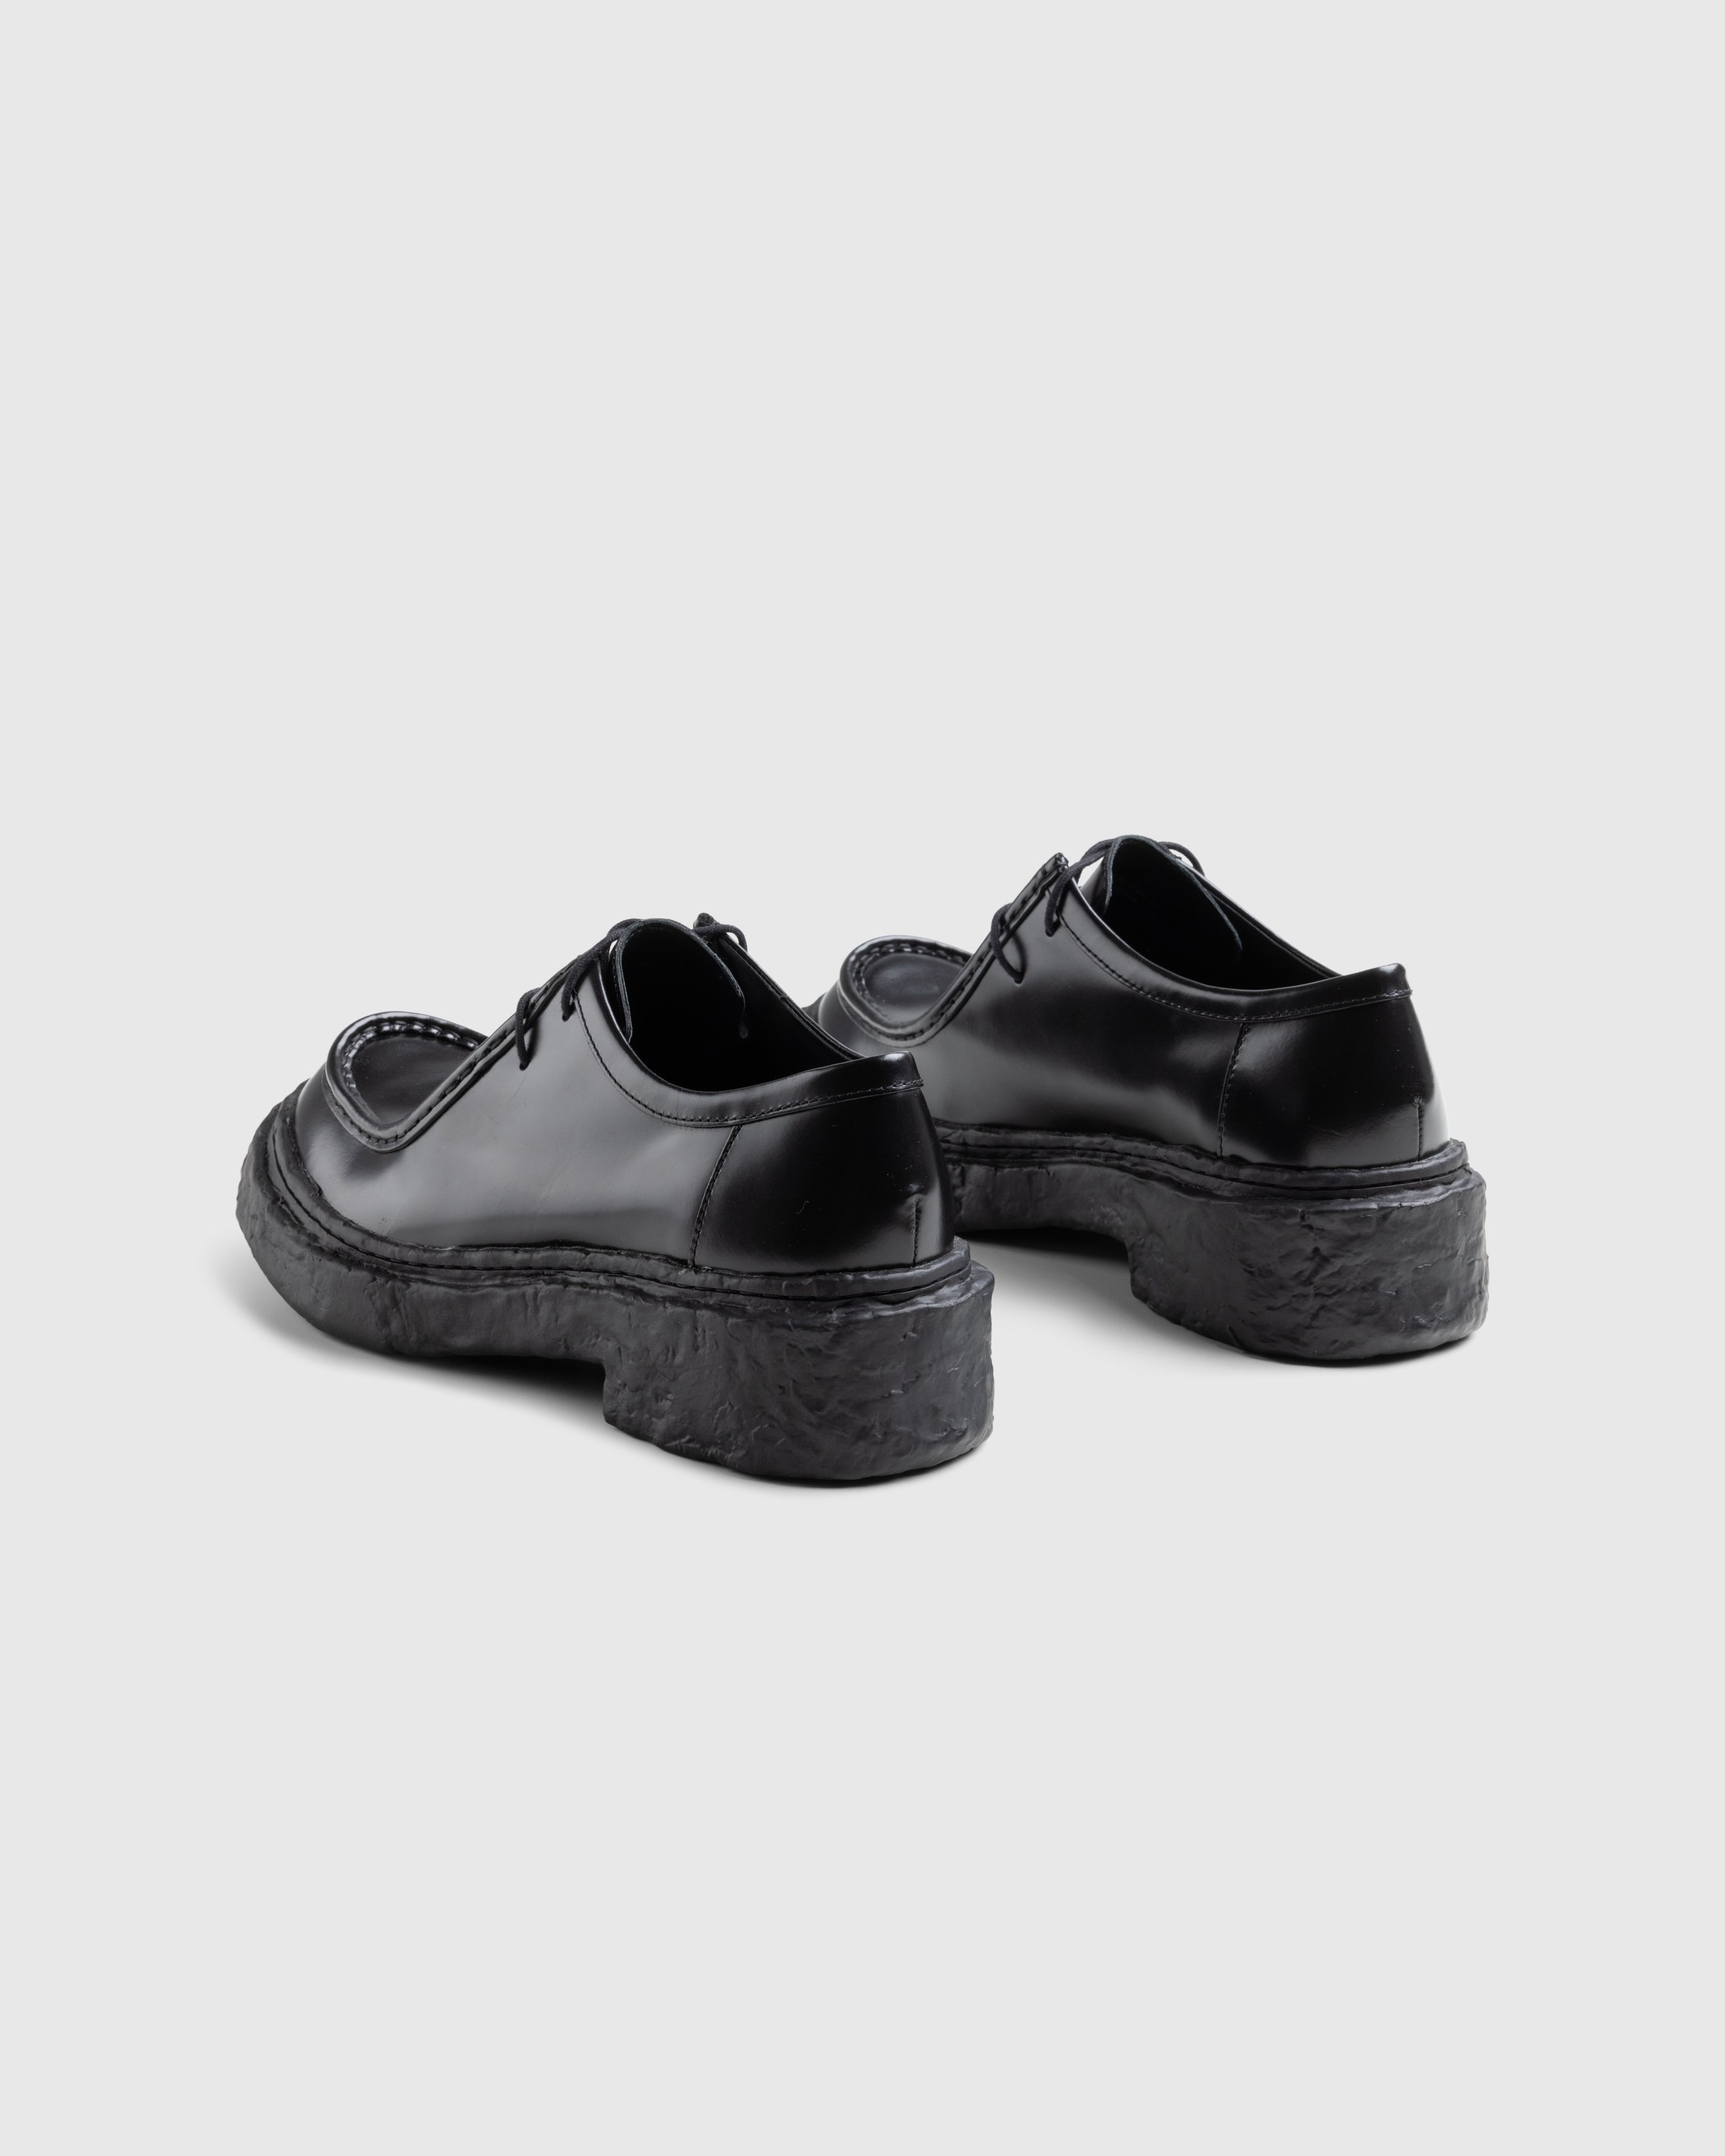 CAMPERLAB - Vamonos - Footwear - Black - Image 4